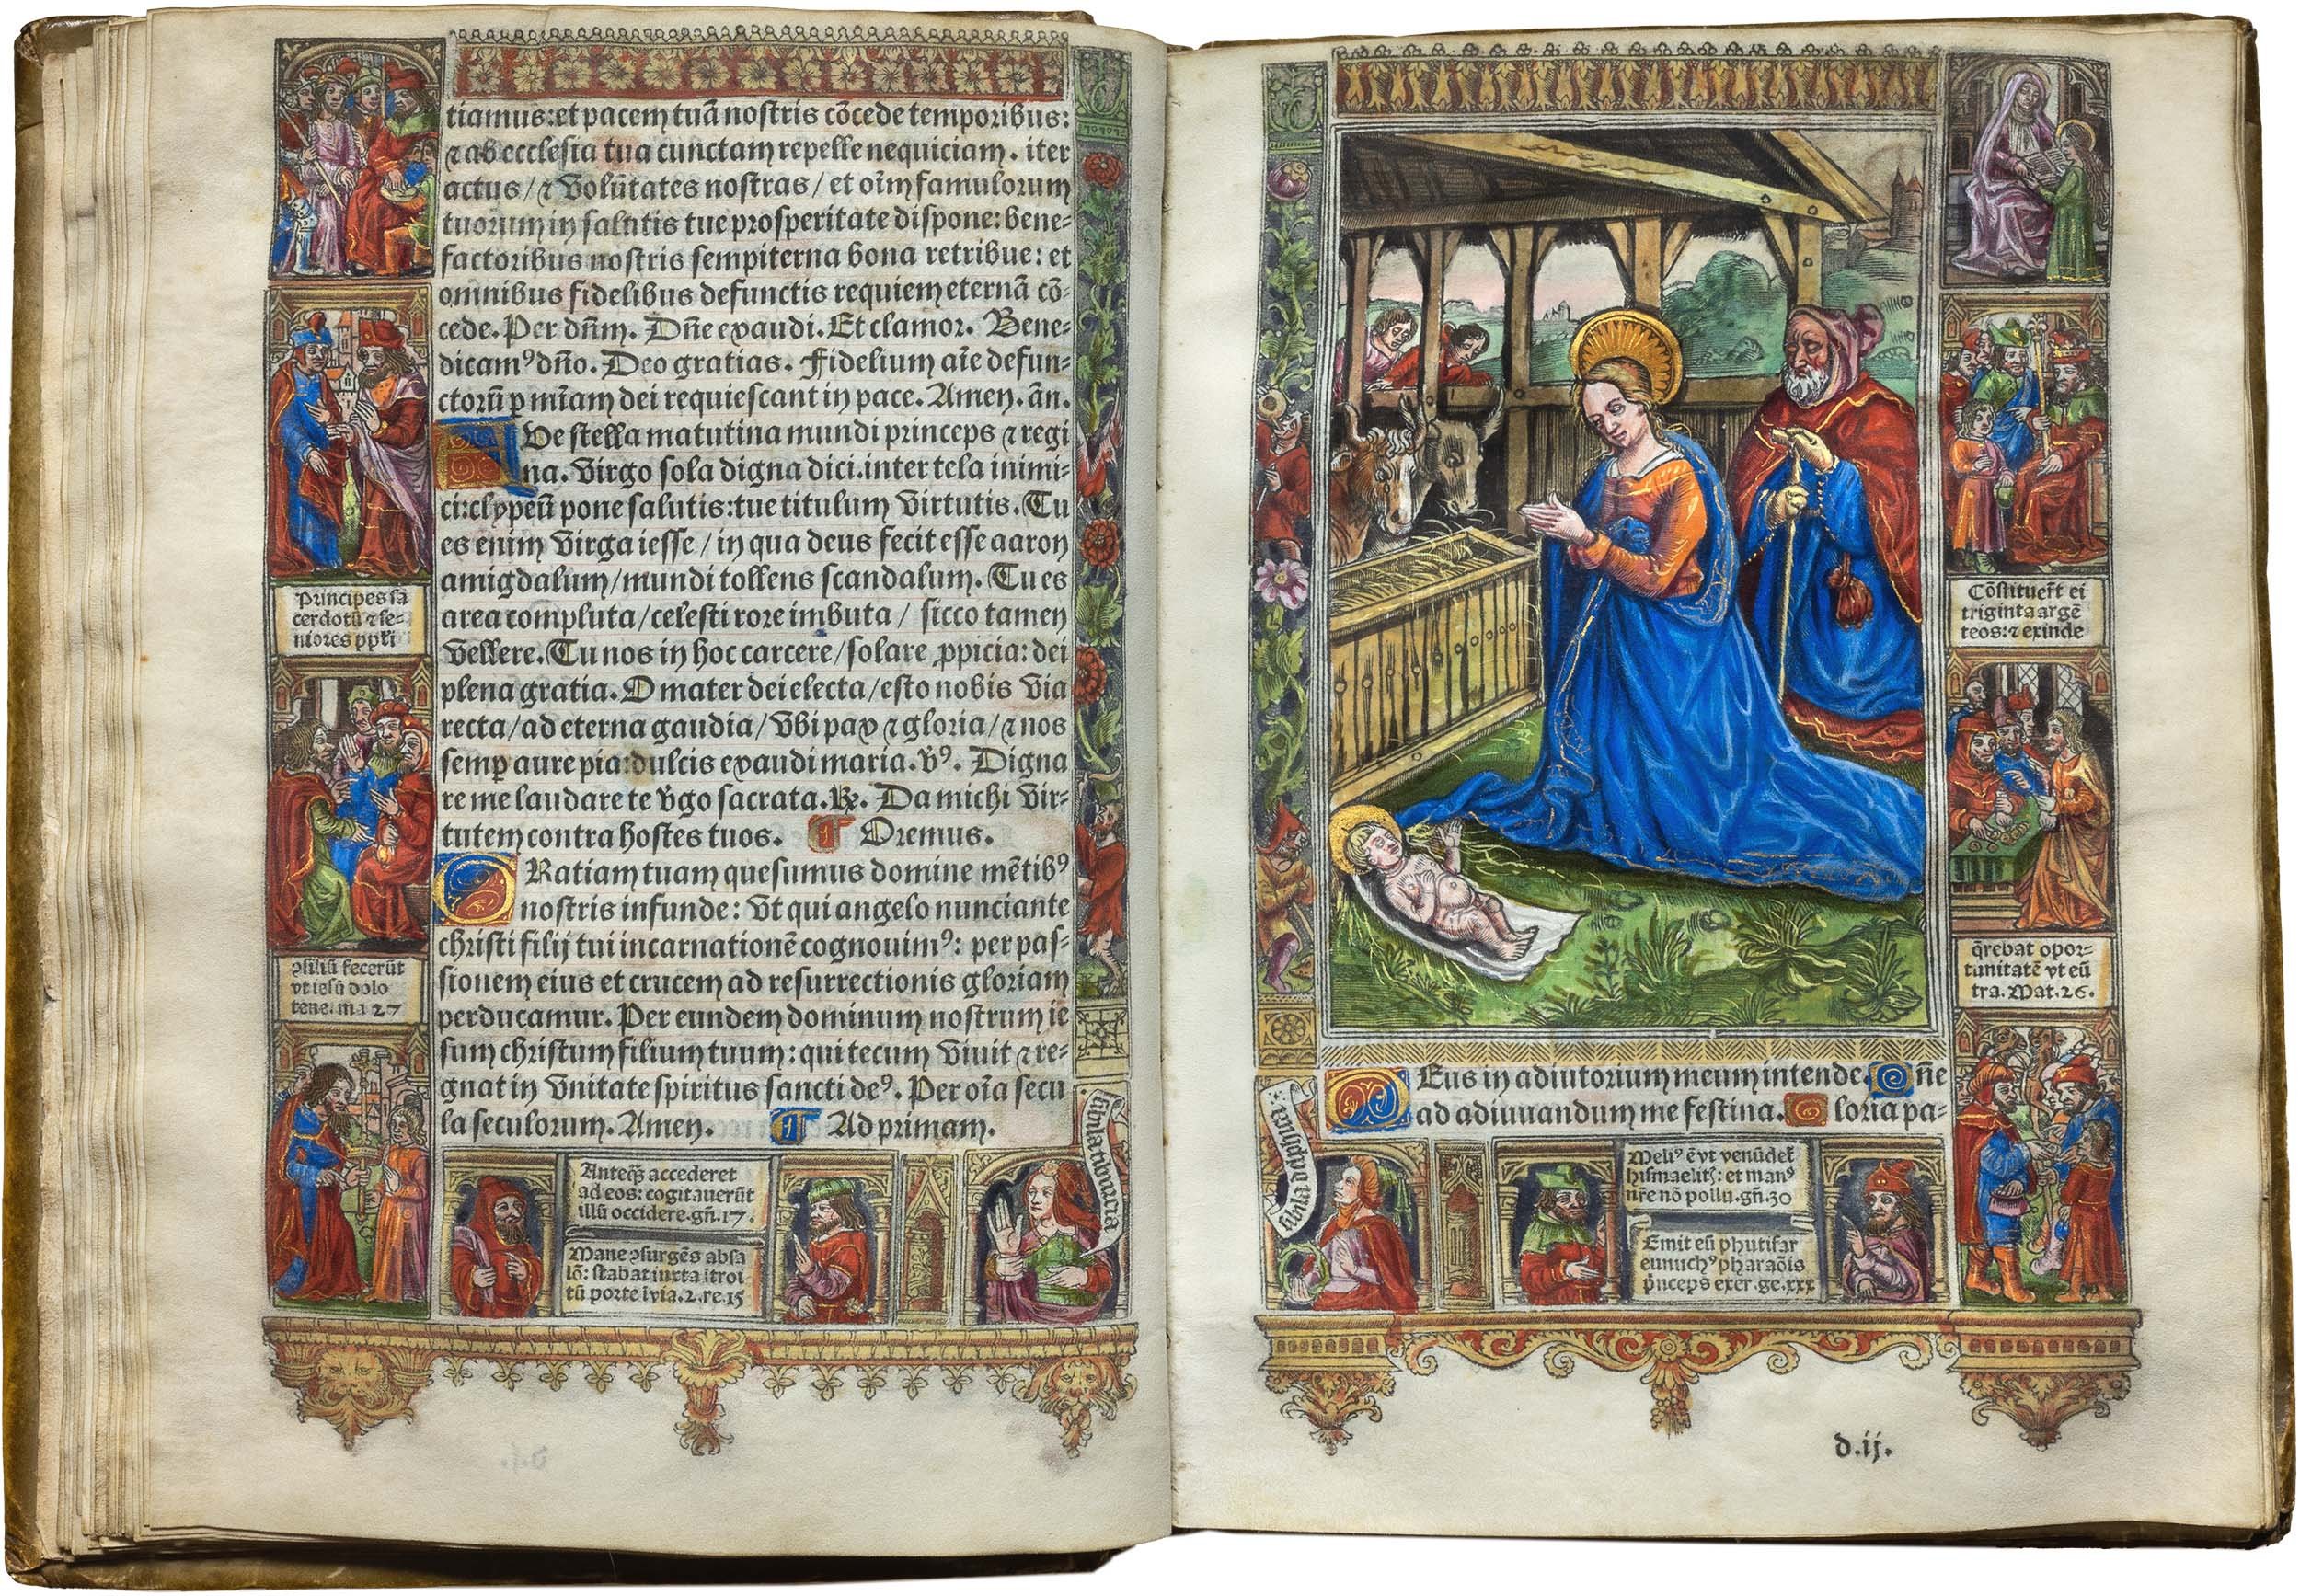 Horae-bmv-31-march-1511-kerver-printed-book-of-hours-illuminated-copy-vellum-29.jpg